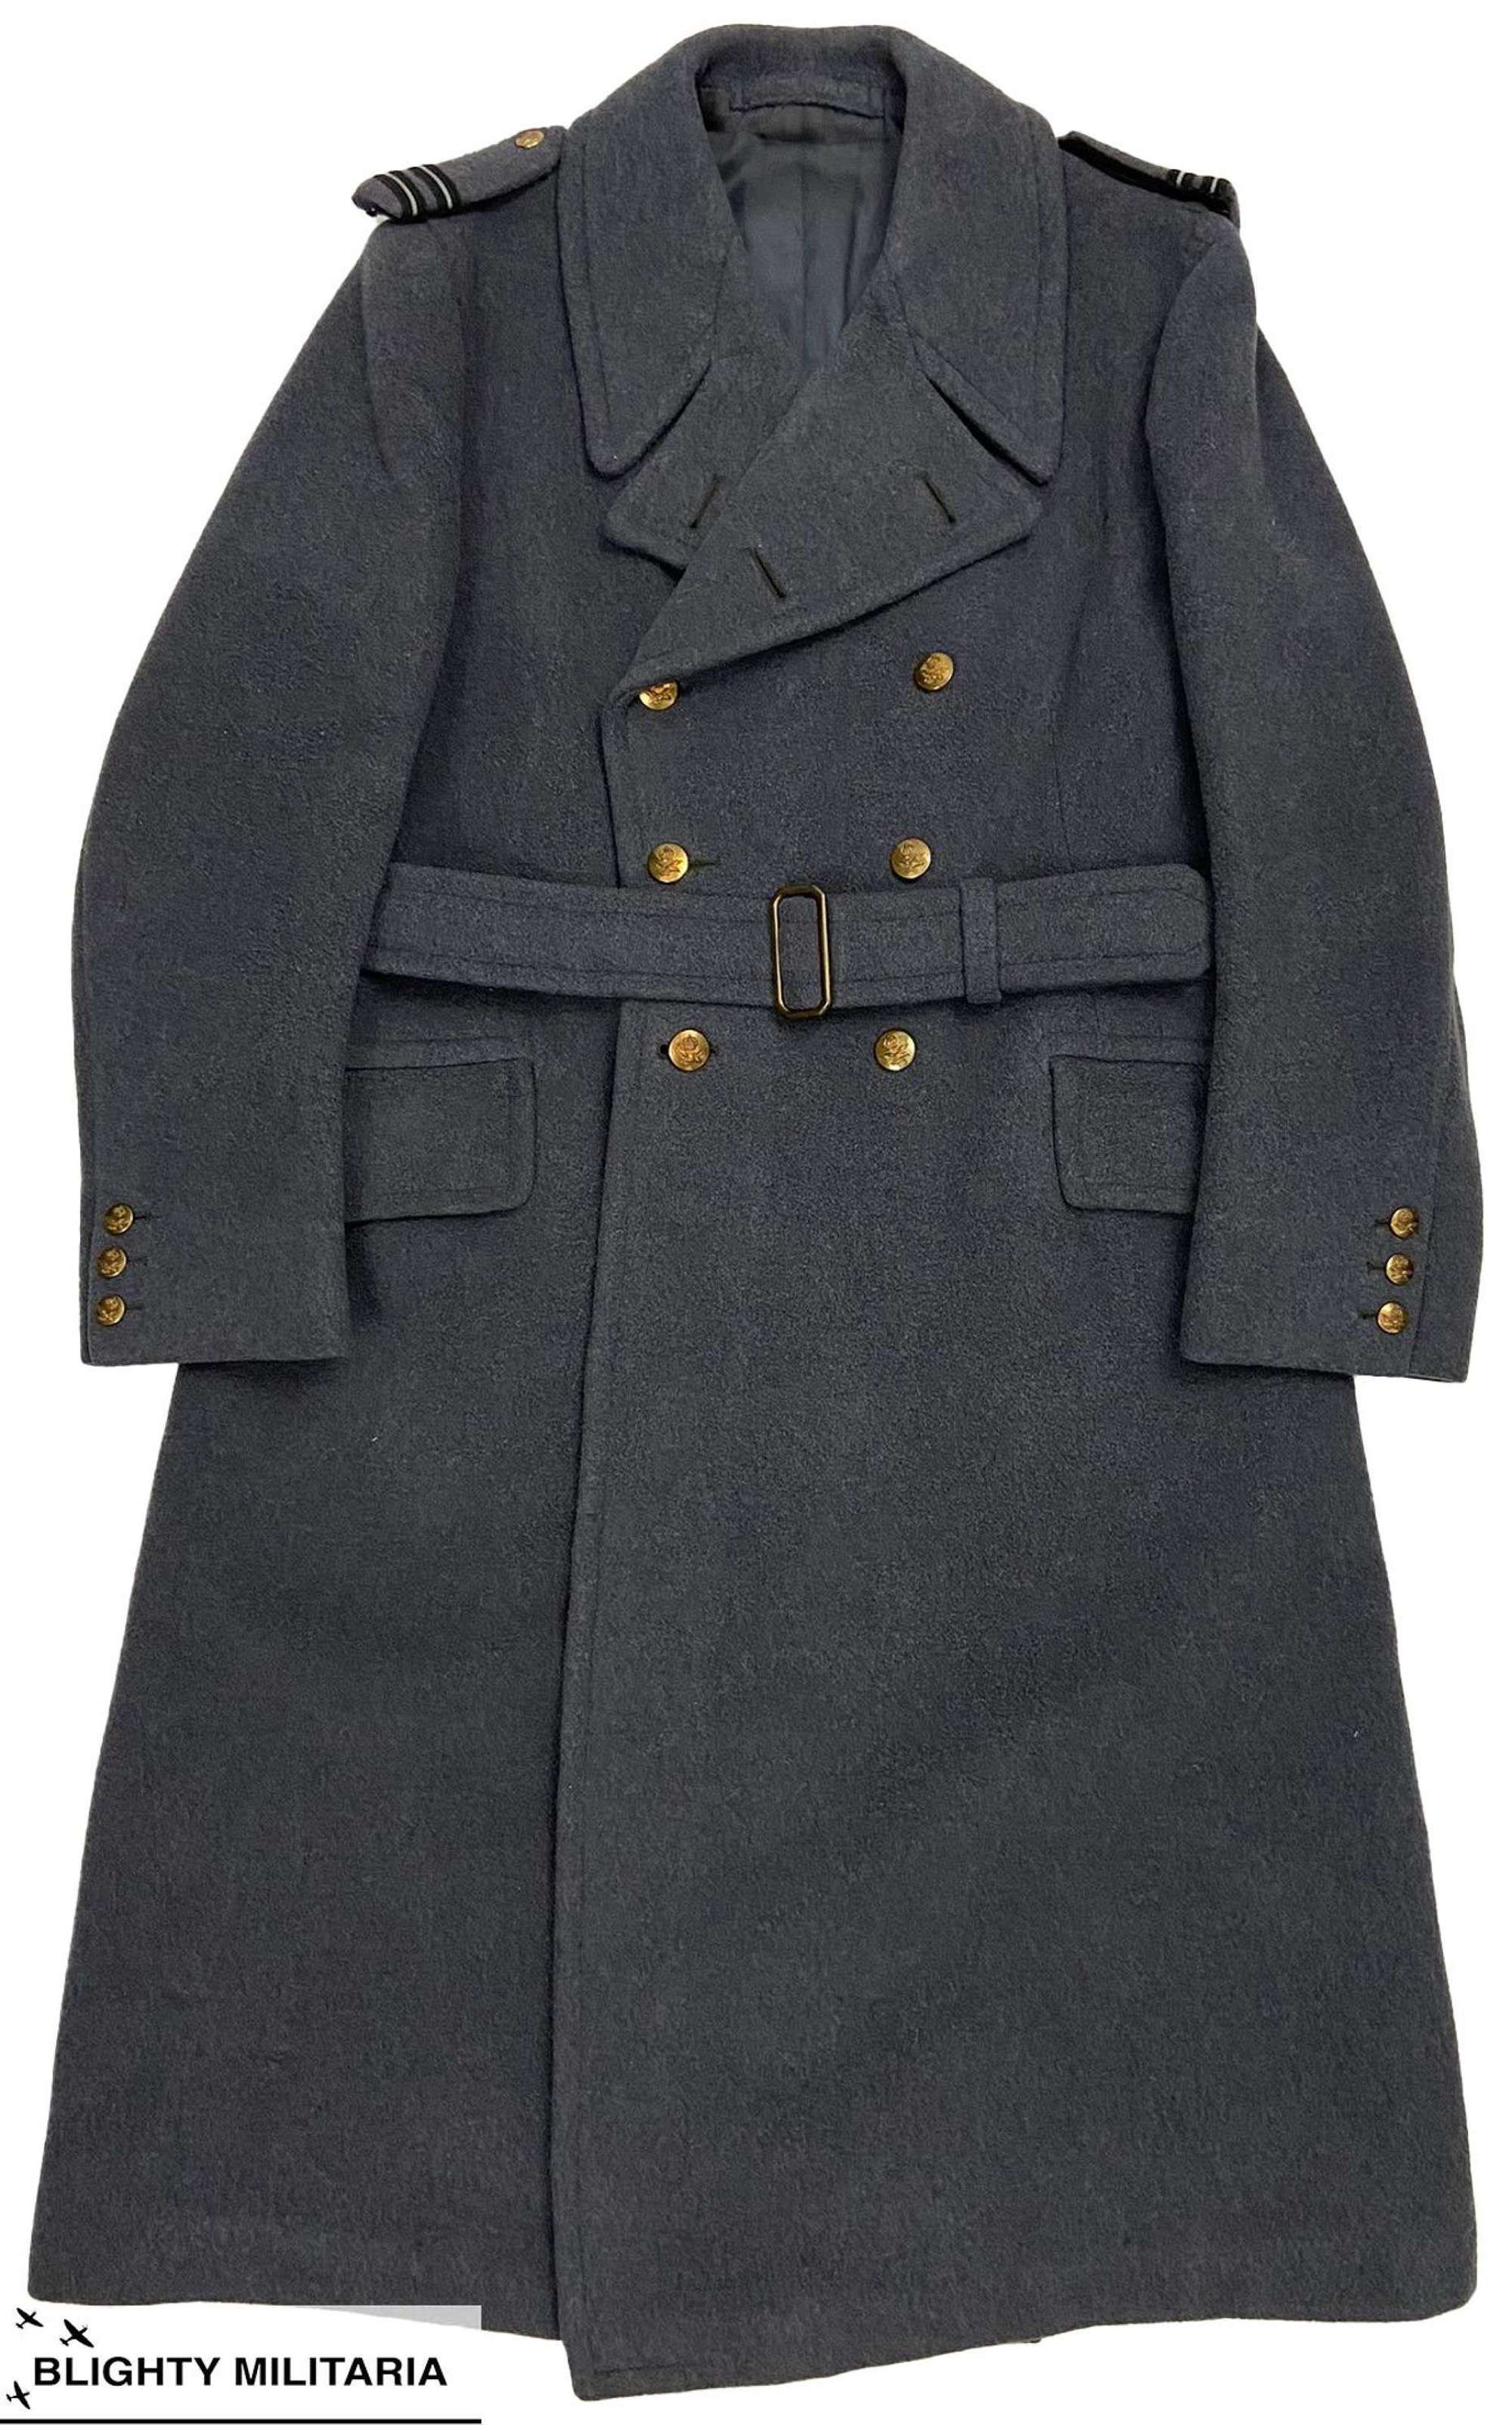 Original 1943 Dated RAF Officer's Greatcoat by 'R.W. Forsyth' Ltd'